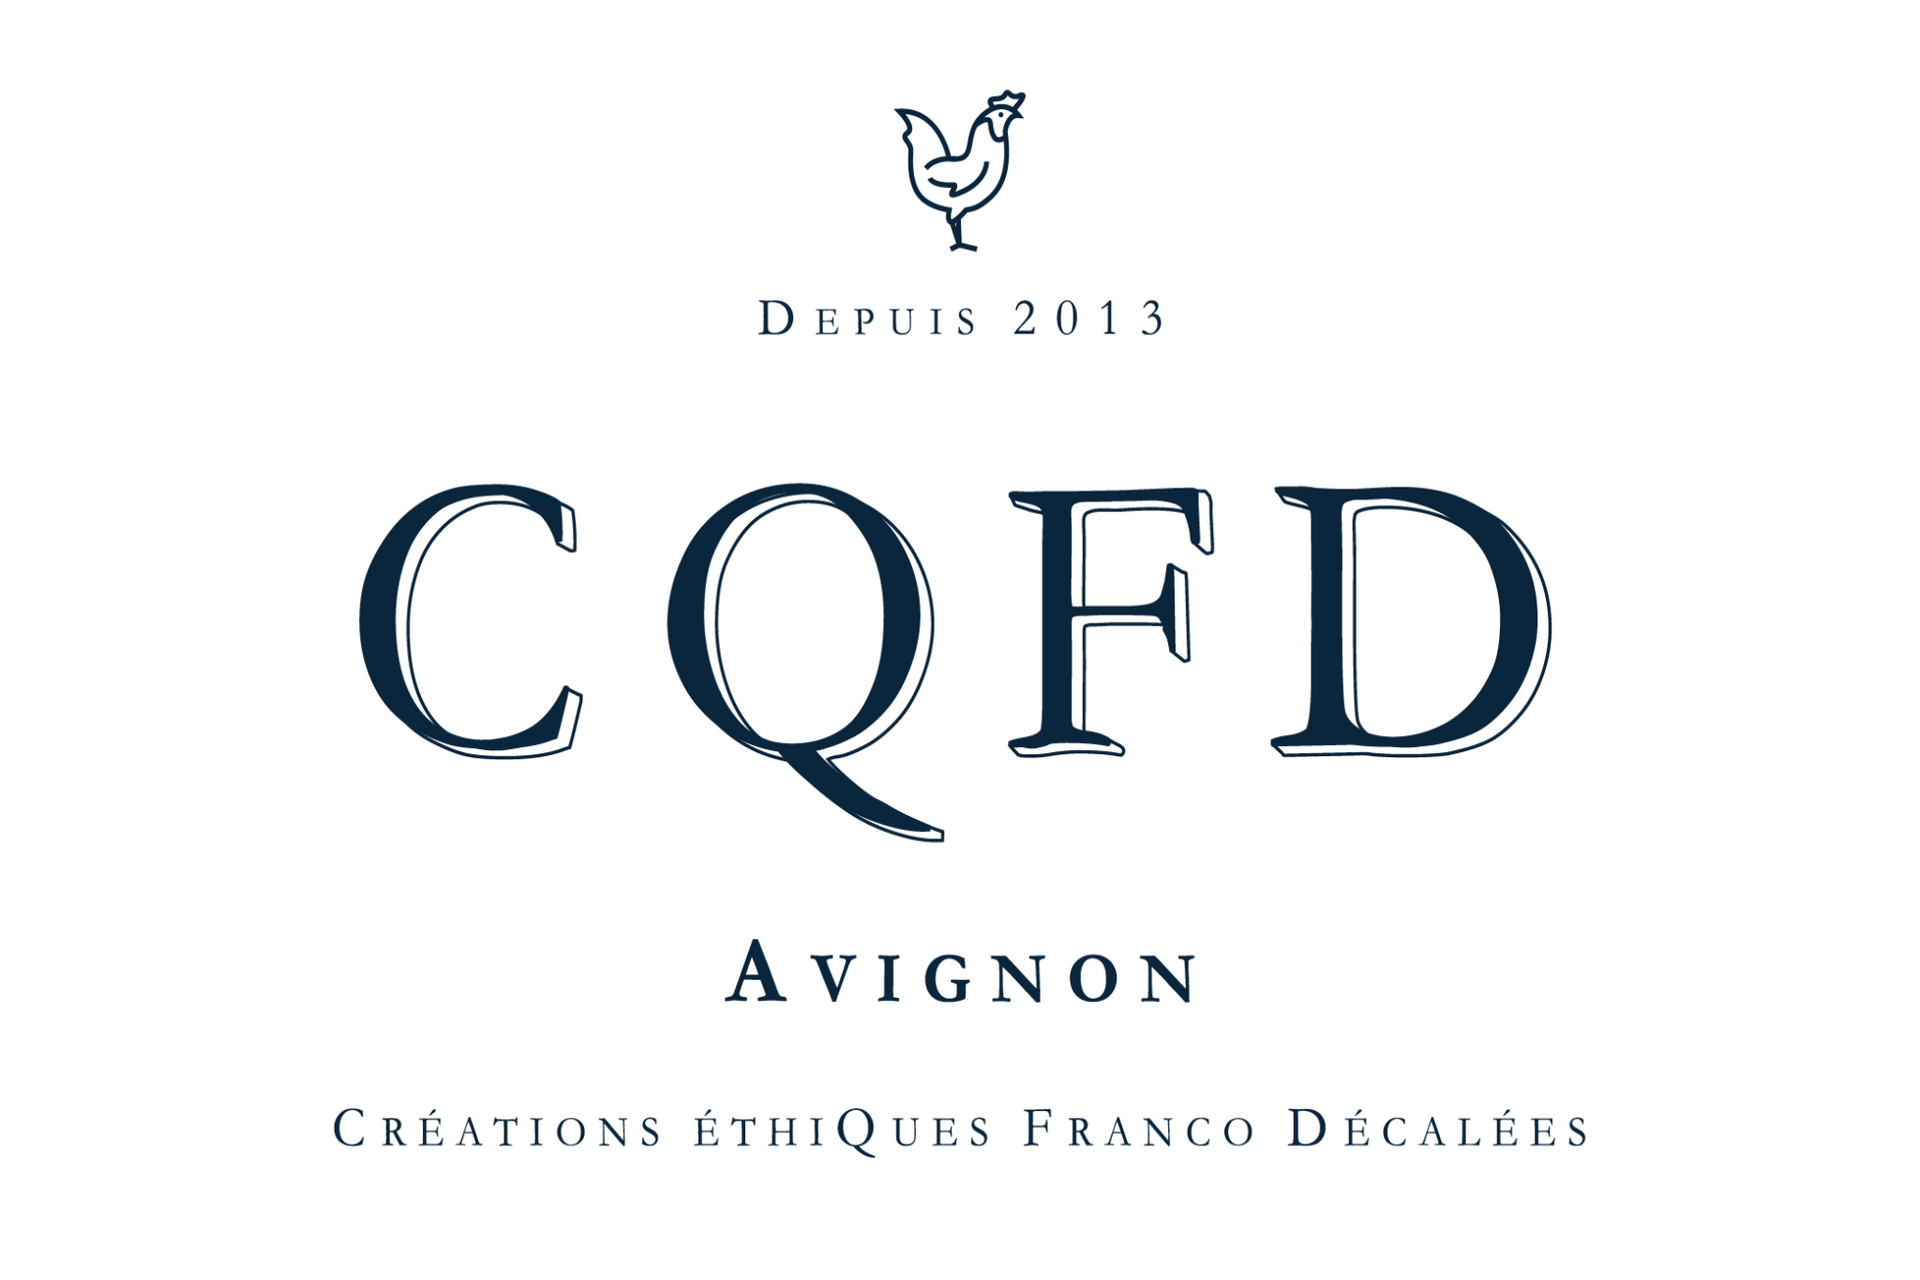 cqfd logo